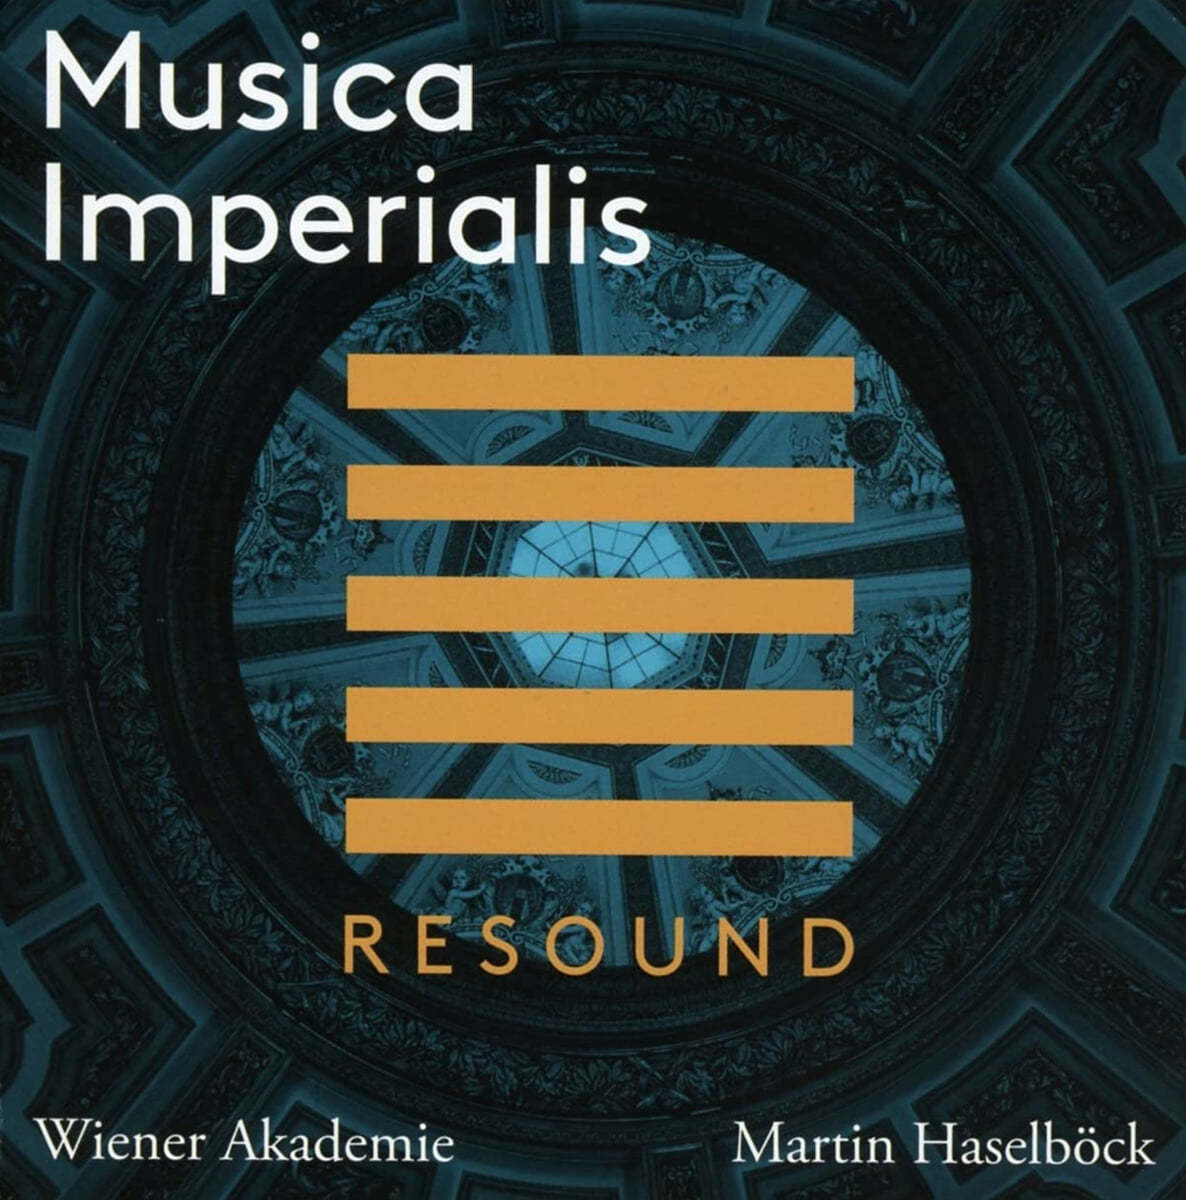 Wiener Akademie / Martin Haselbock 무지카 임페리알리스 (Musica Imperialis) 